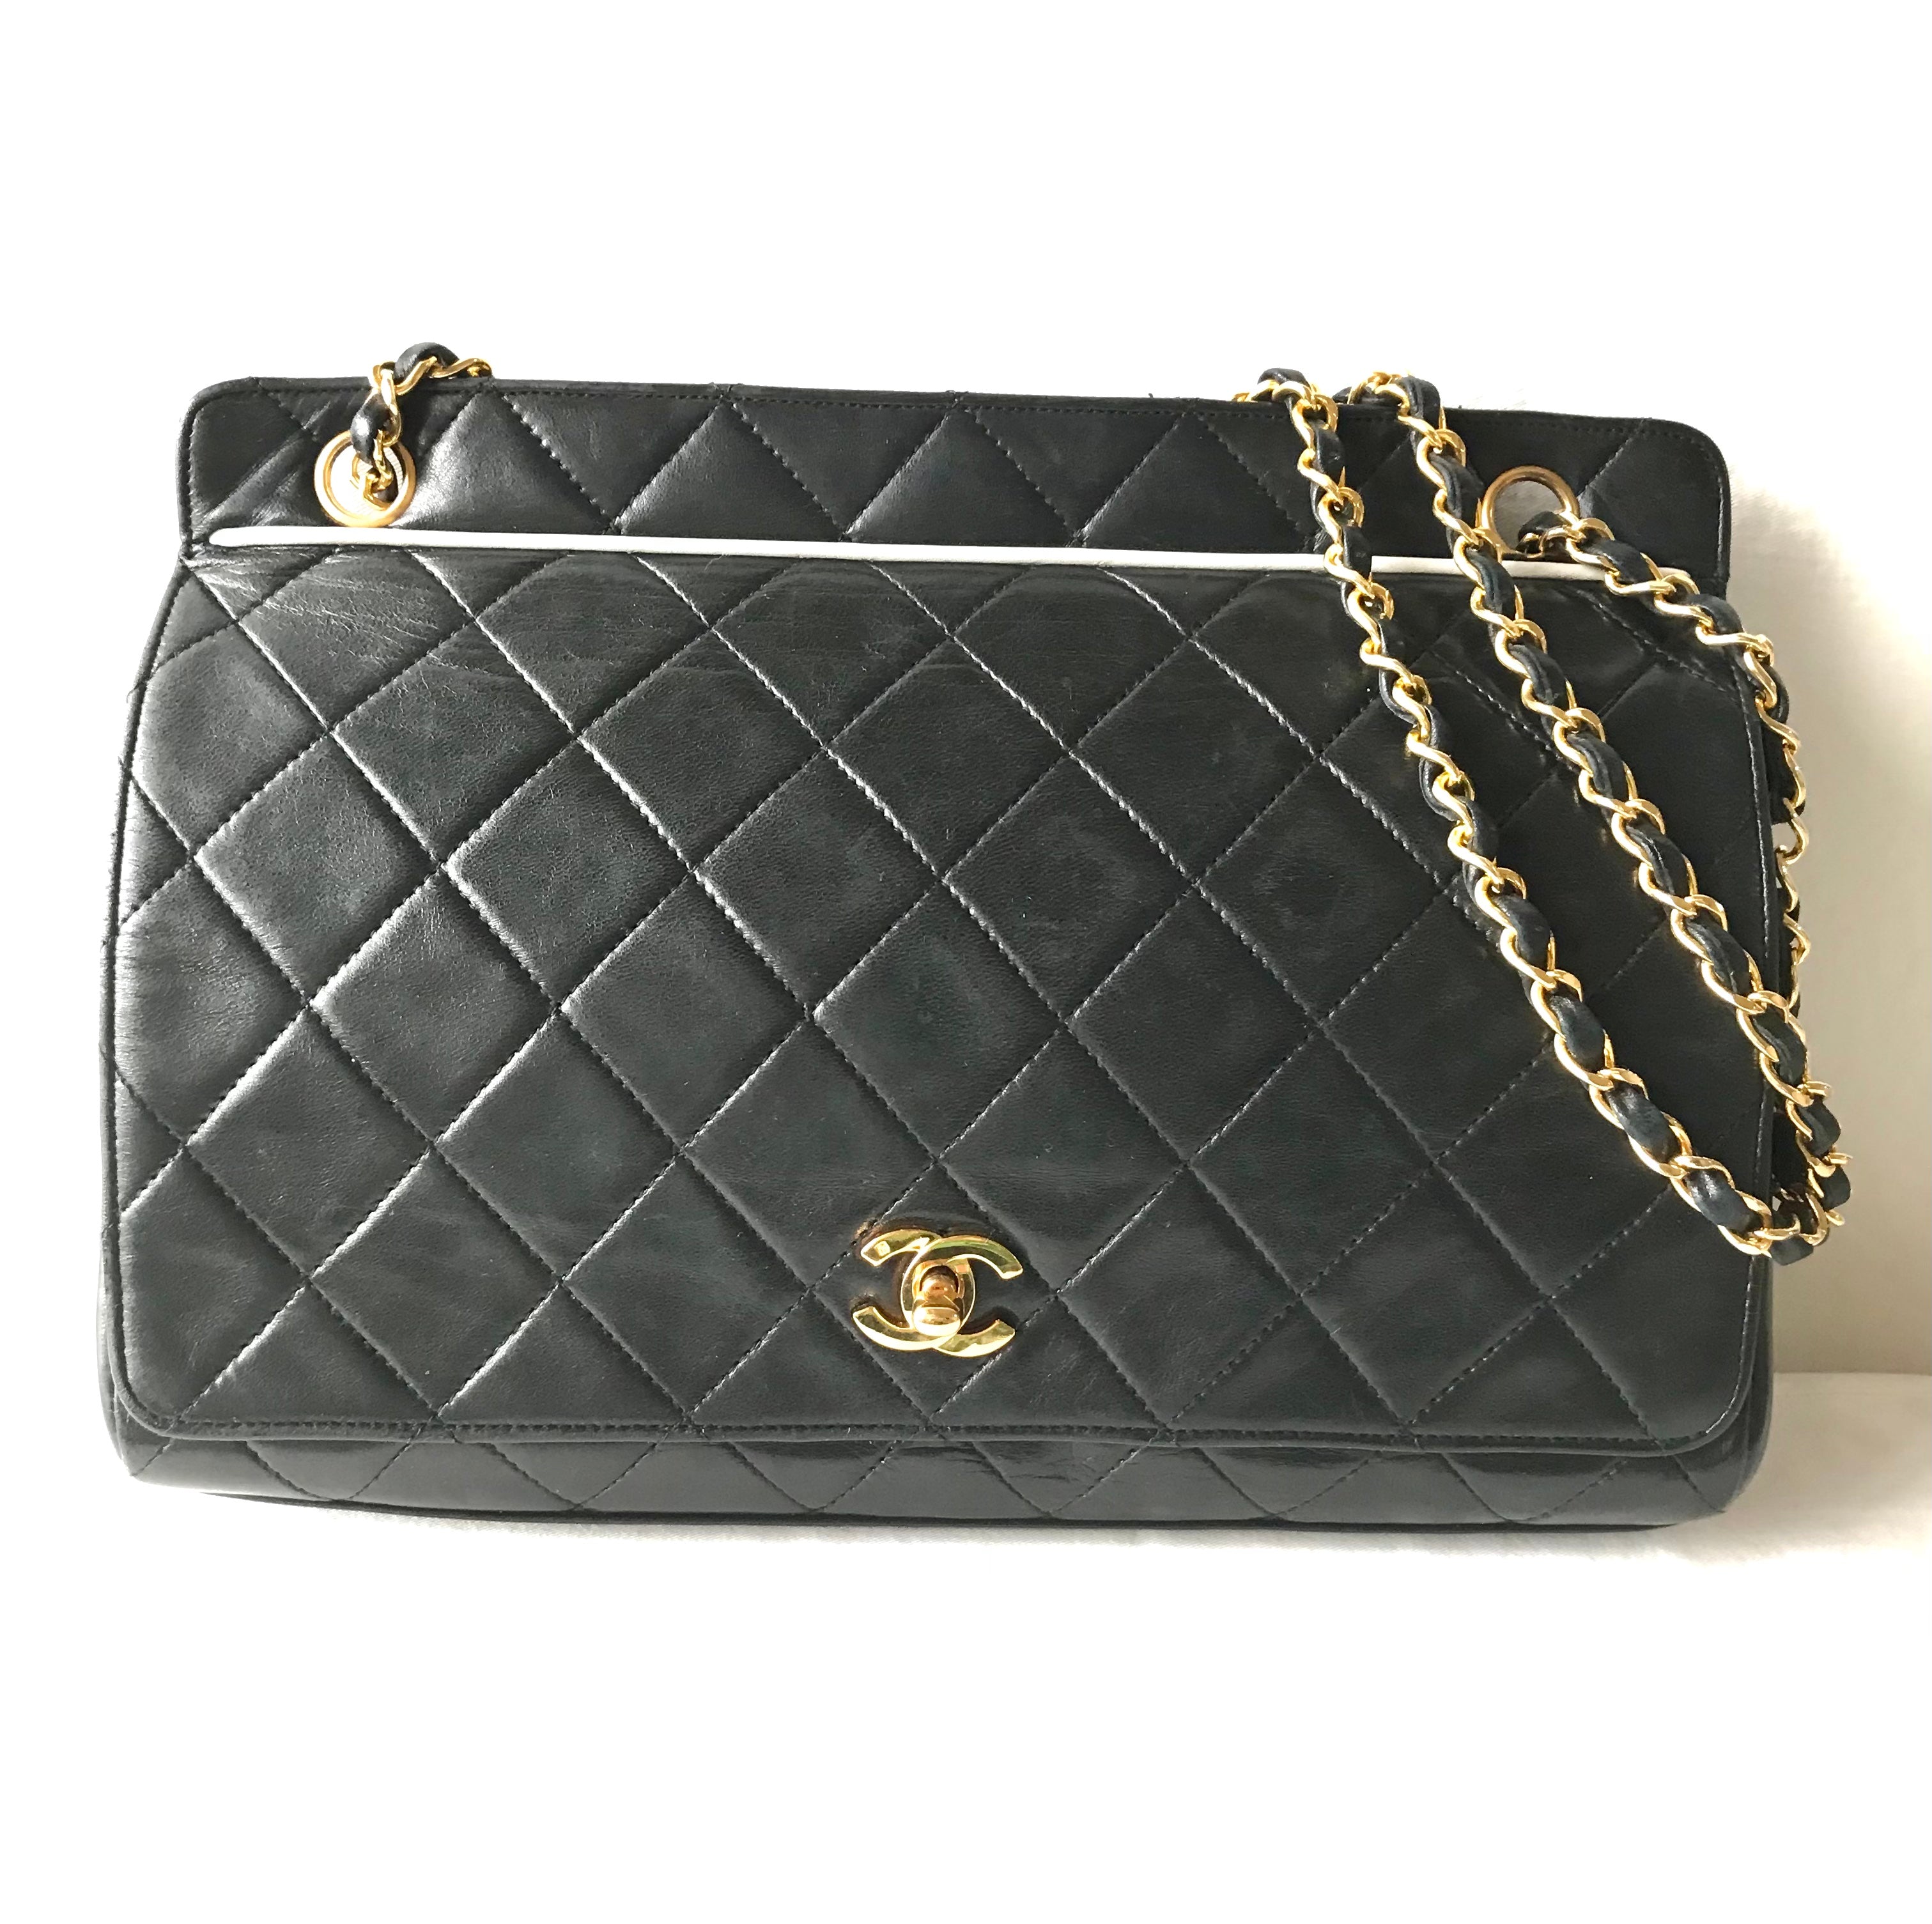 Chanel Chanel White Caviar Leather 2.55 10 Shoulder Bag Gold CC